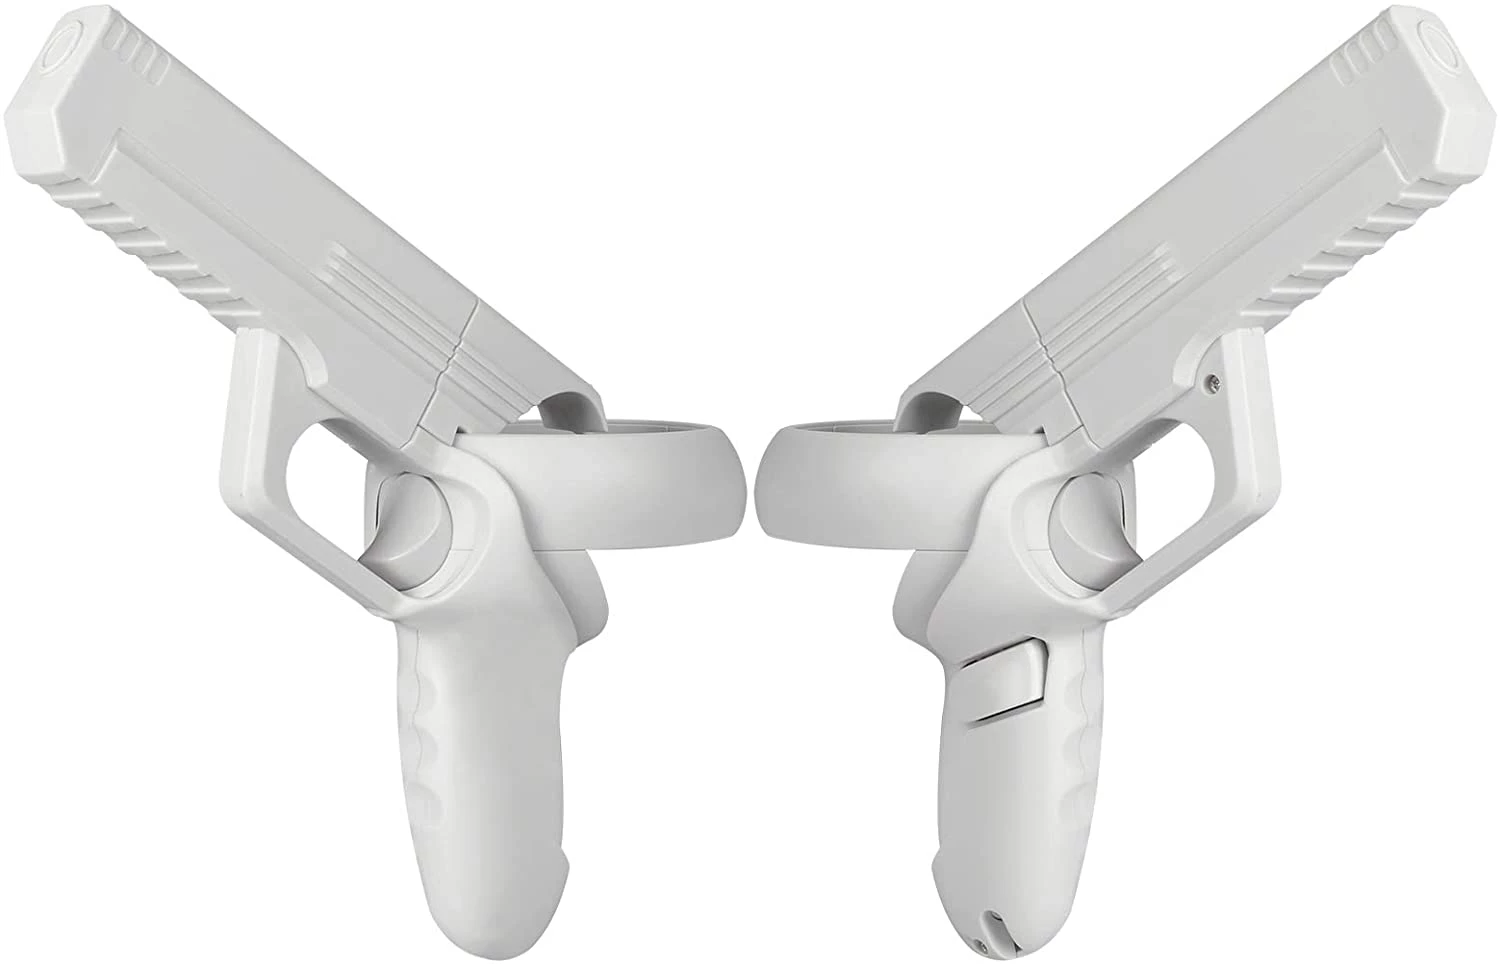 Ігровий пістолет Eyglo VR для ручок сенсорного контролера Oculus Quest 2 - White